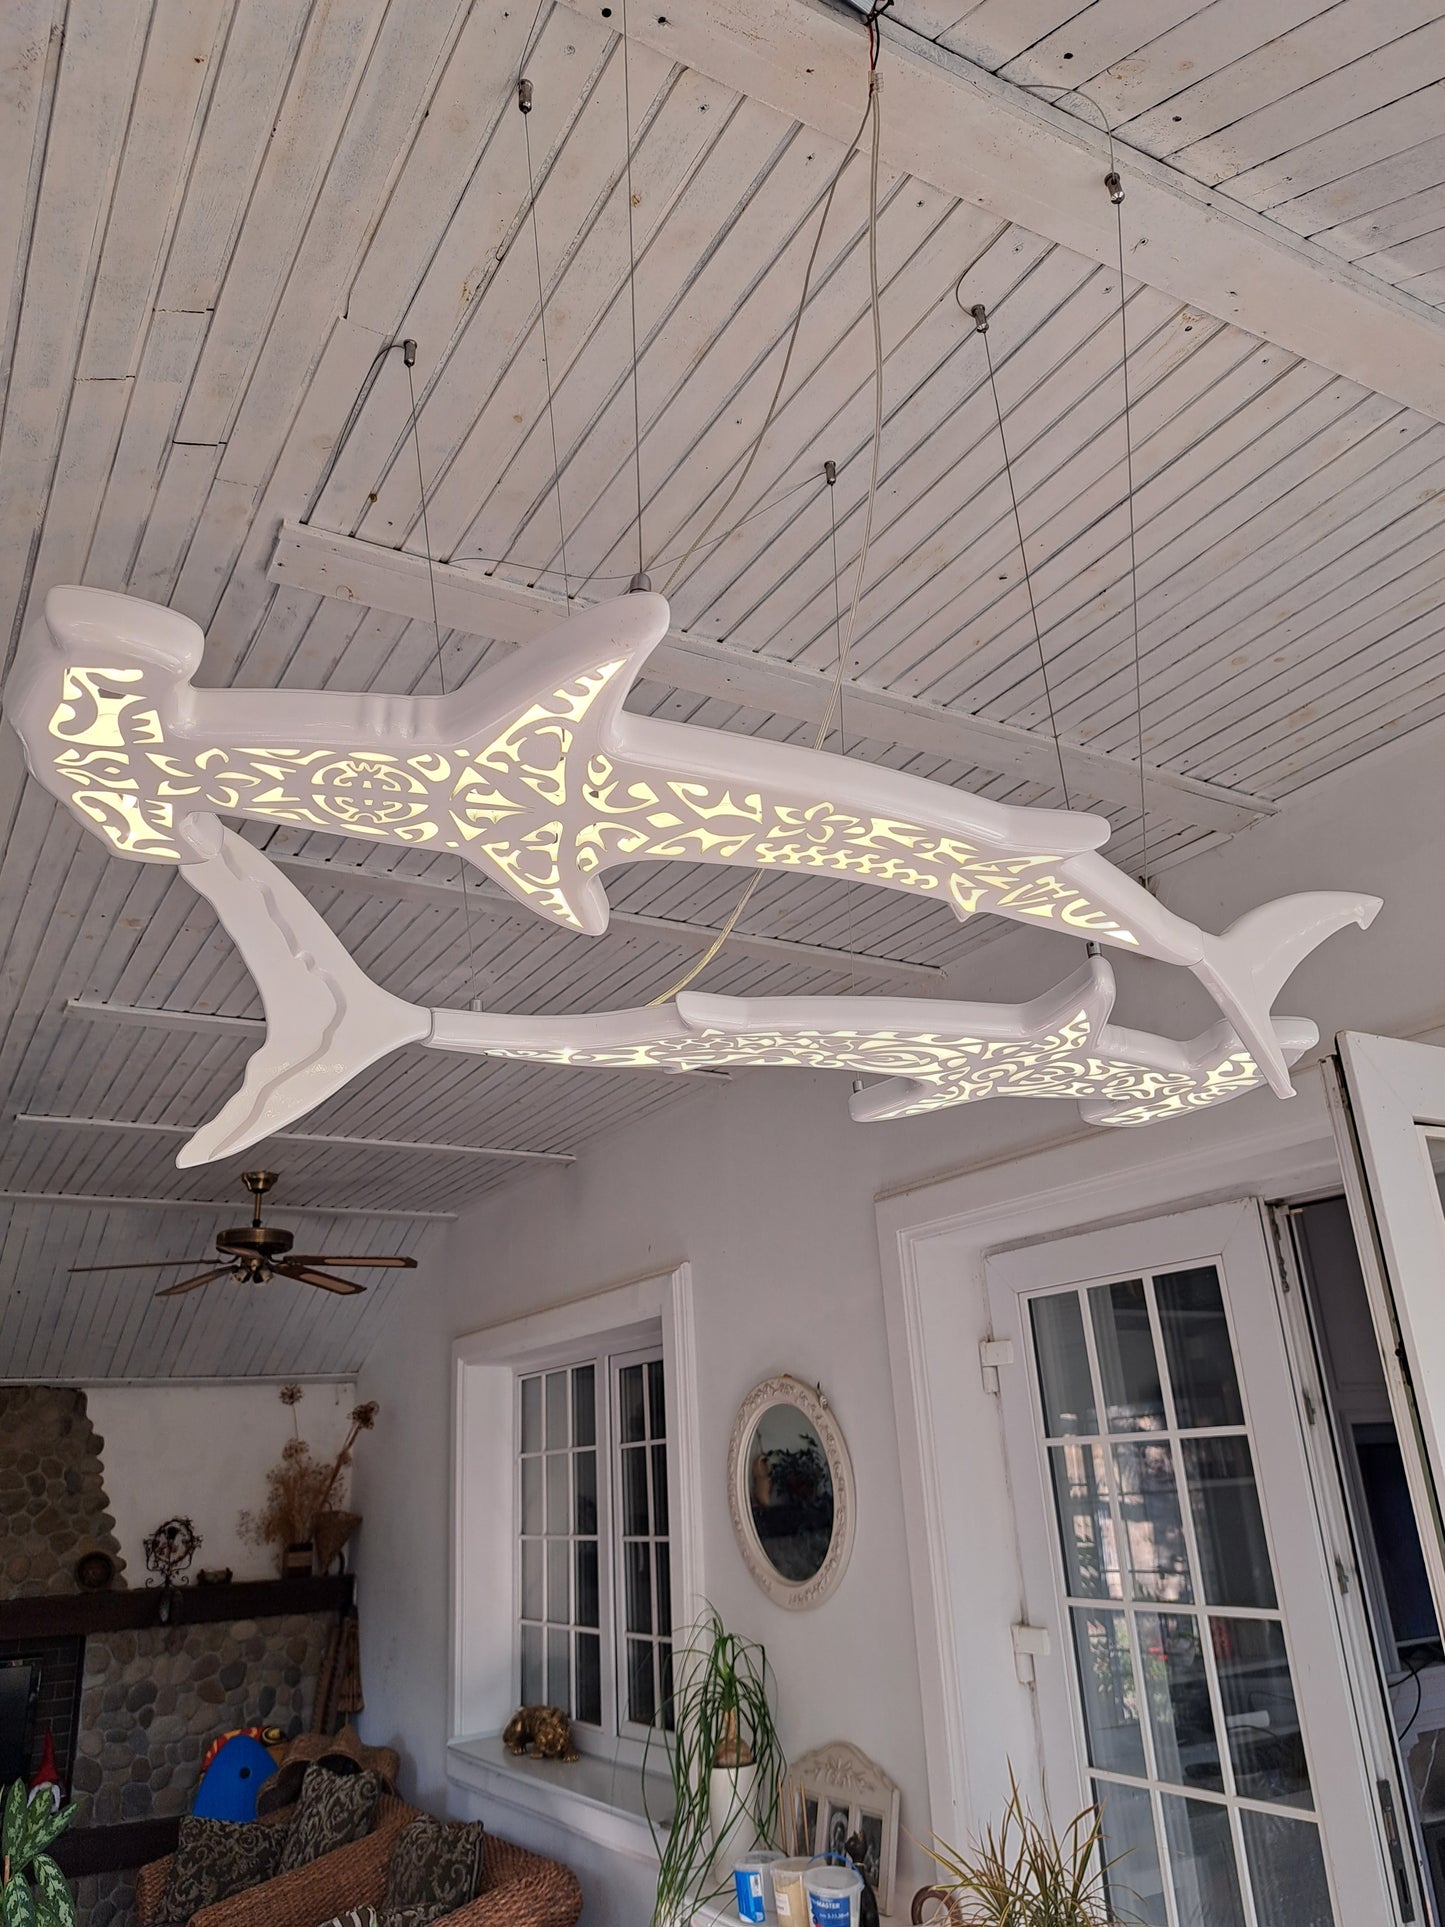 Handmade wood ceiling chandelier with 2 hammerhead sharks: LED wall light for beach coastal or nautical Maori surfing style room decor